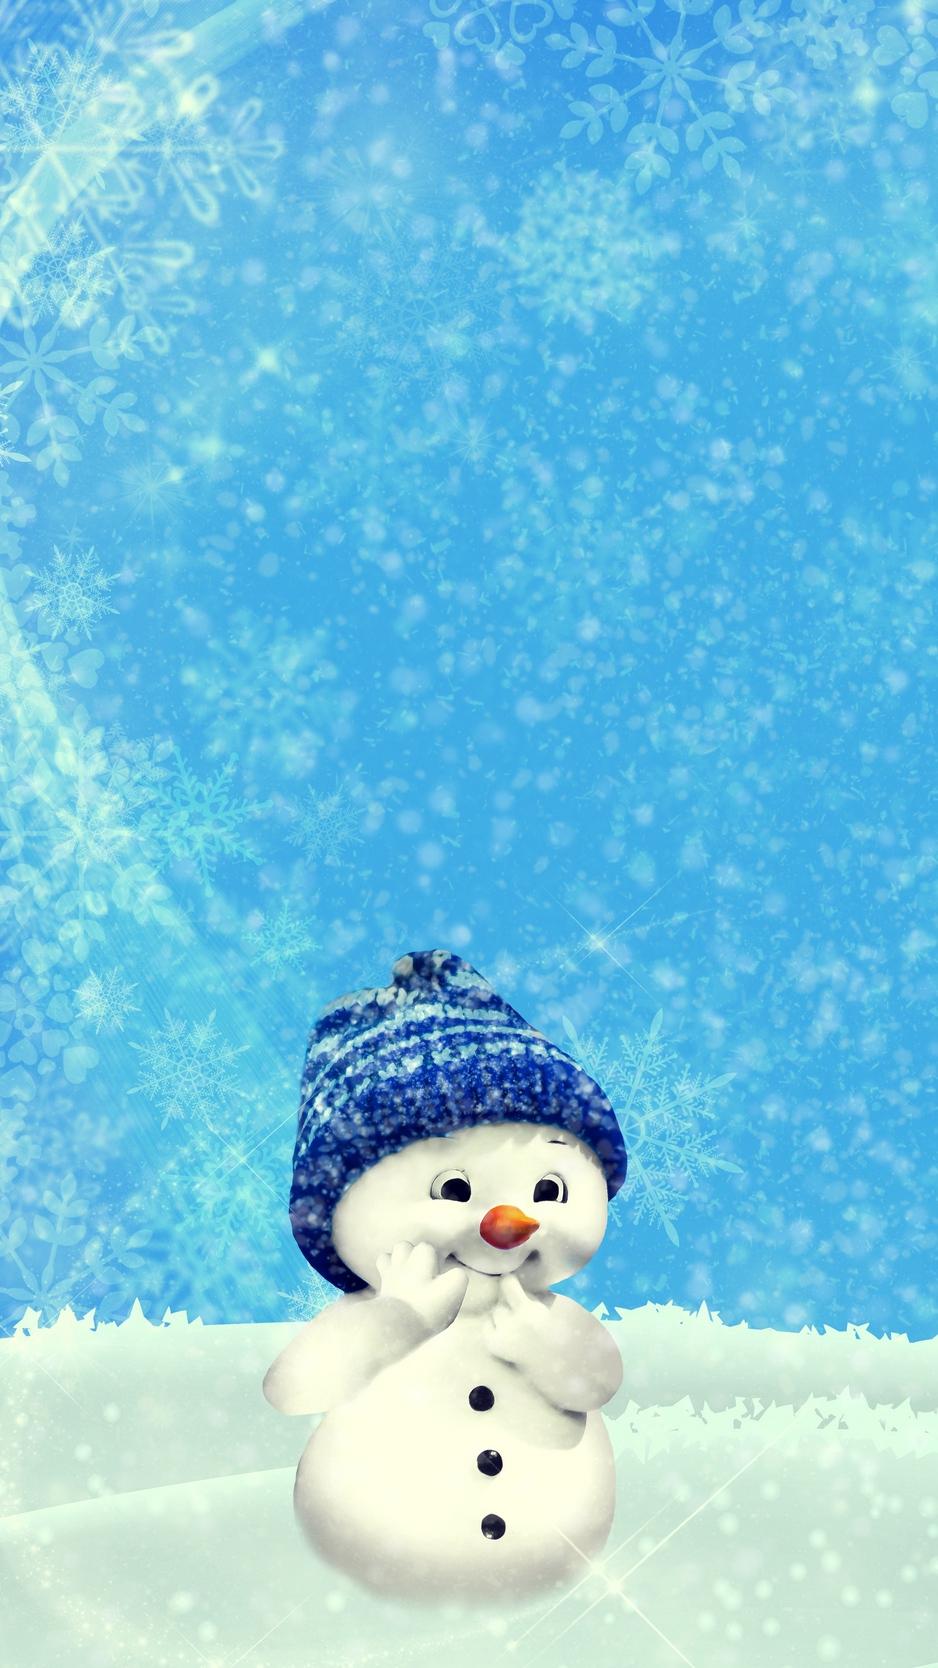 Snowman, winter, christmas, new year, cute wallpaper